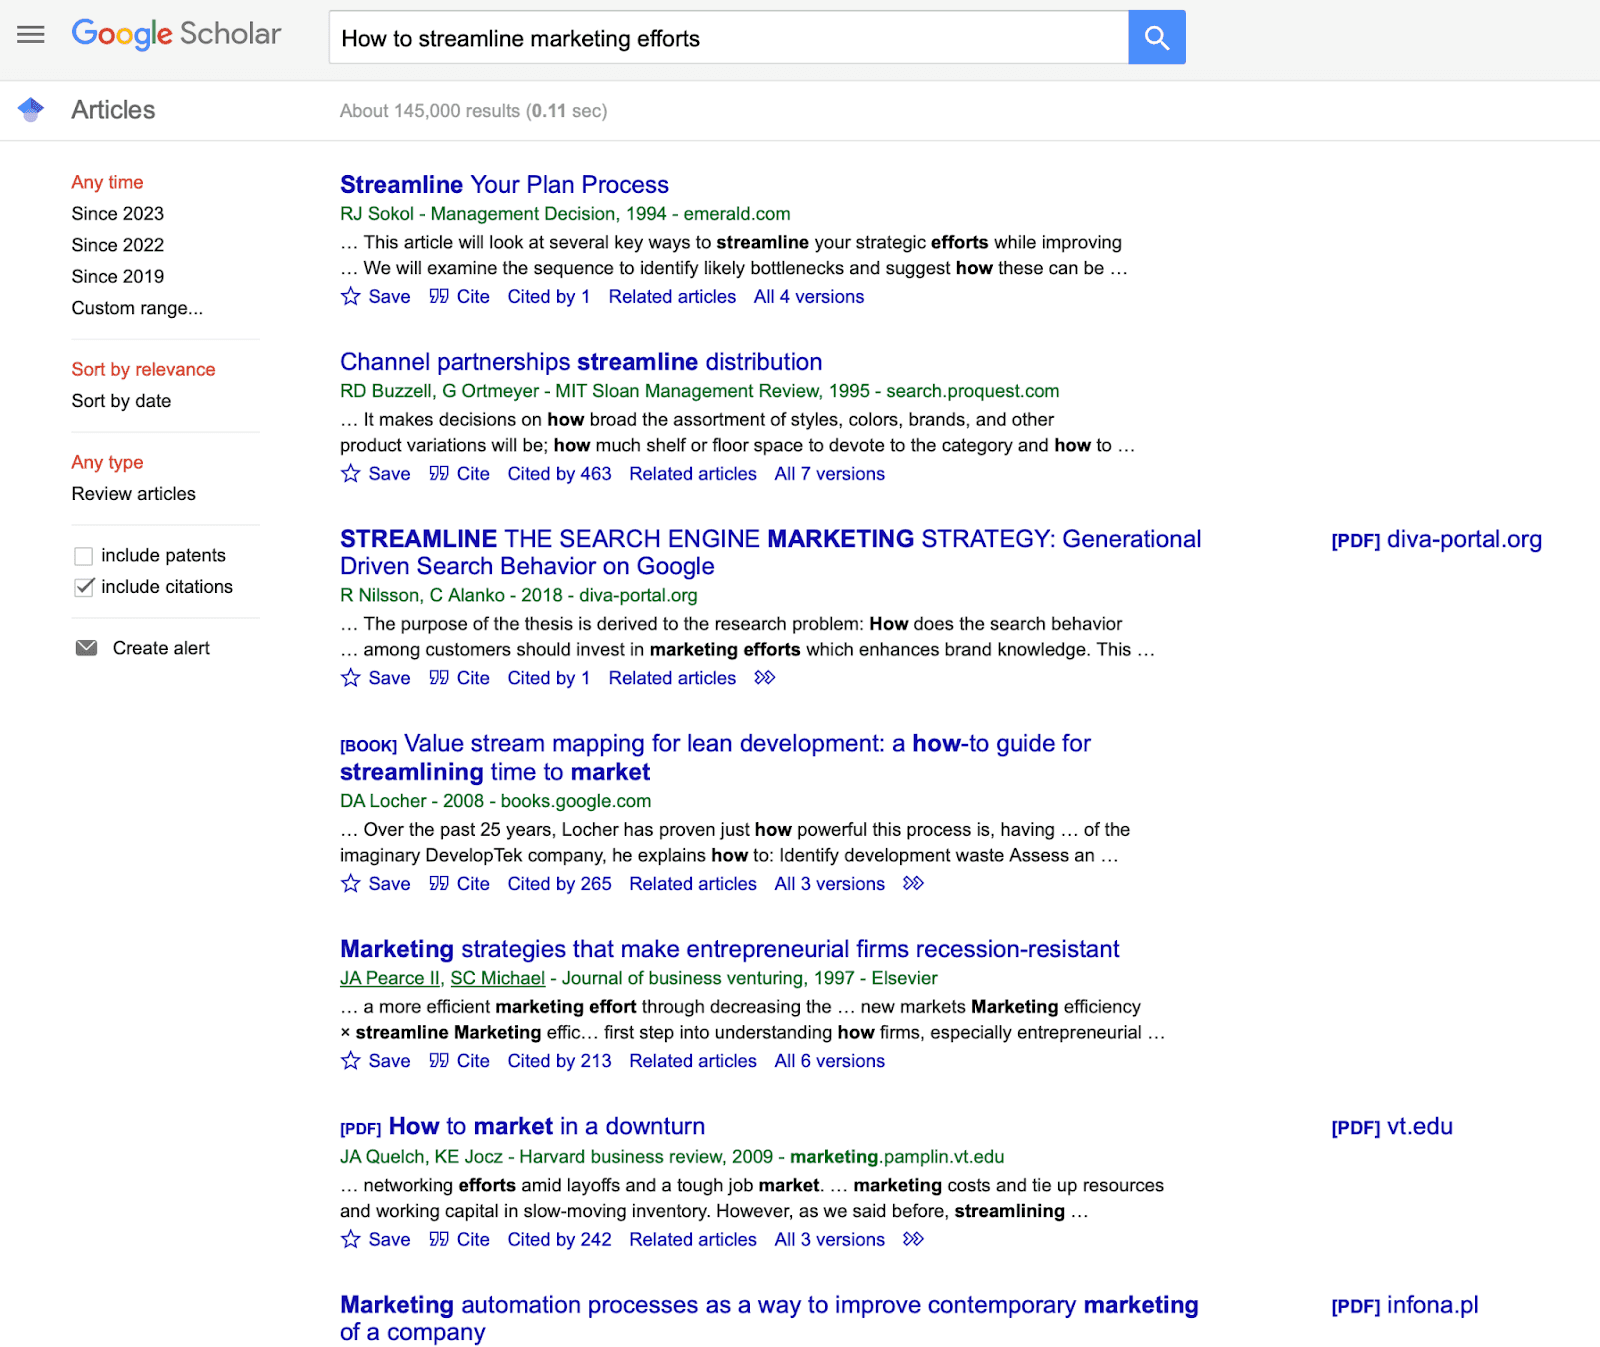 Google Scholar "How to streamline marketing efforts" search